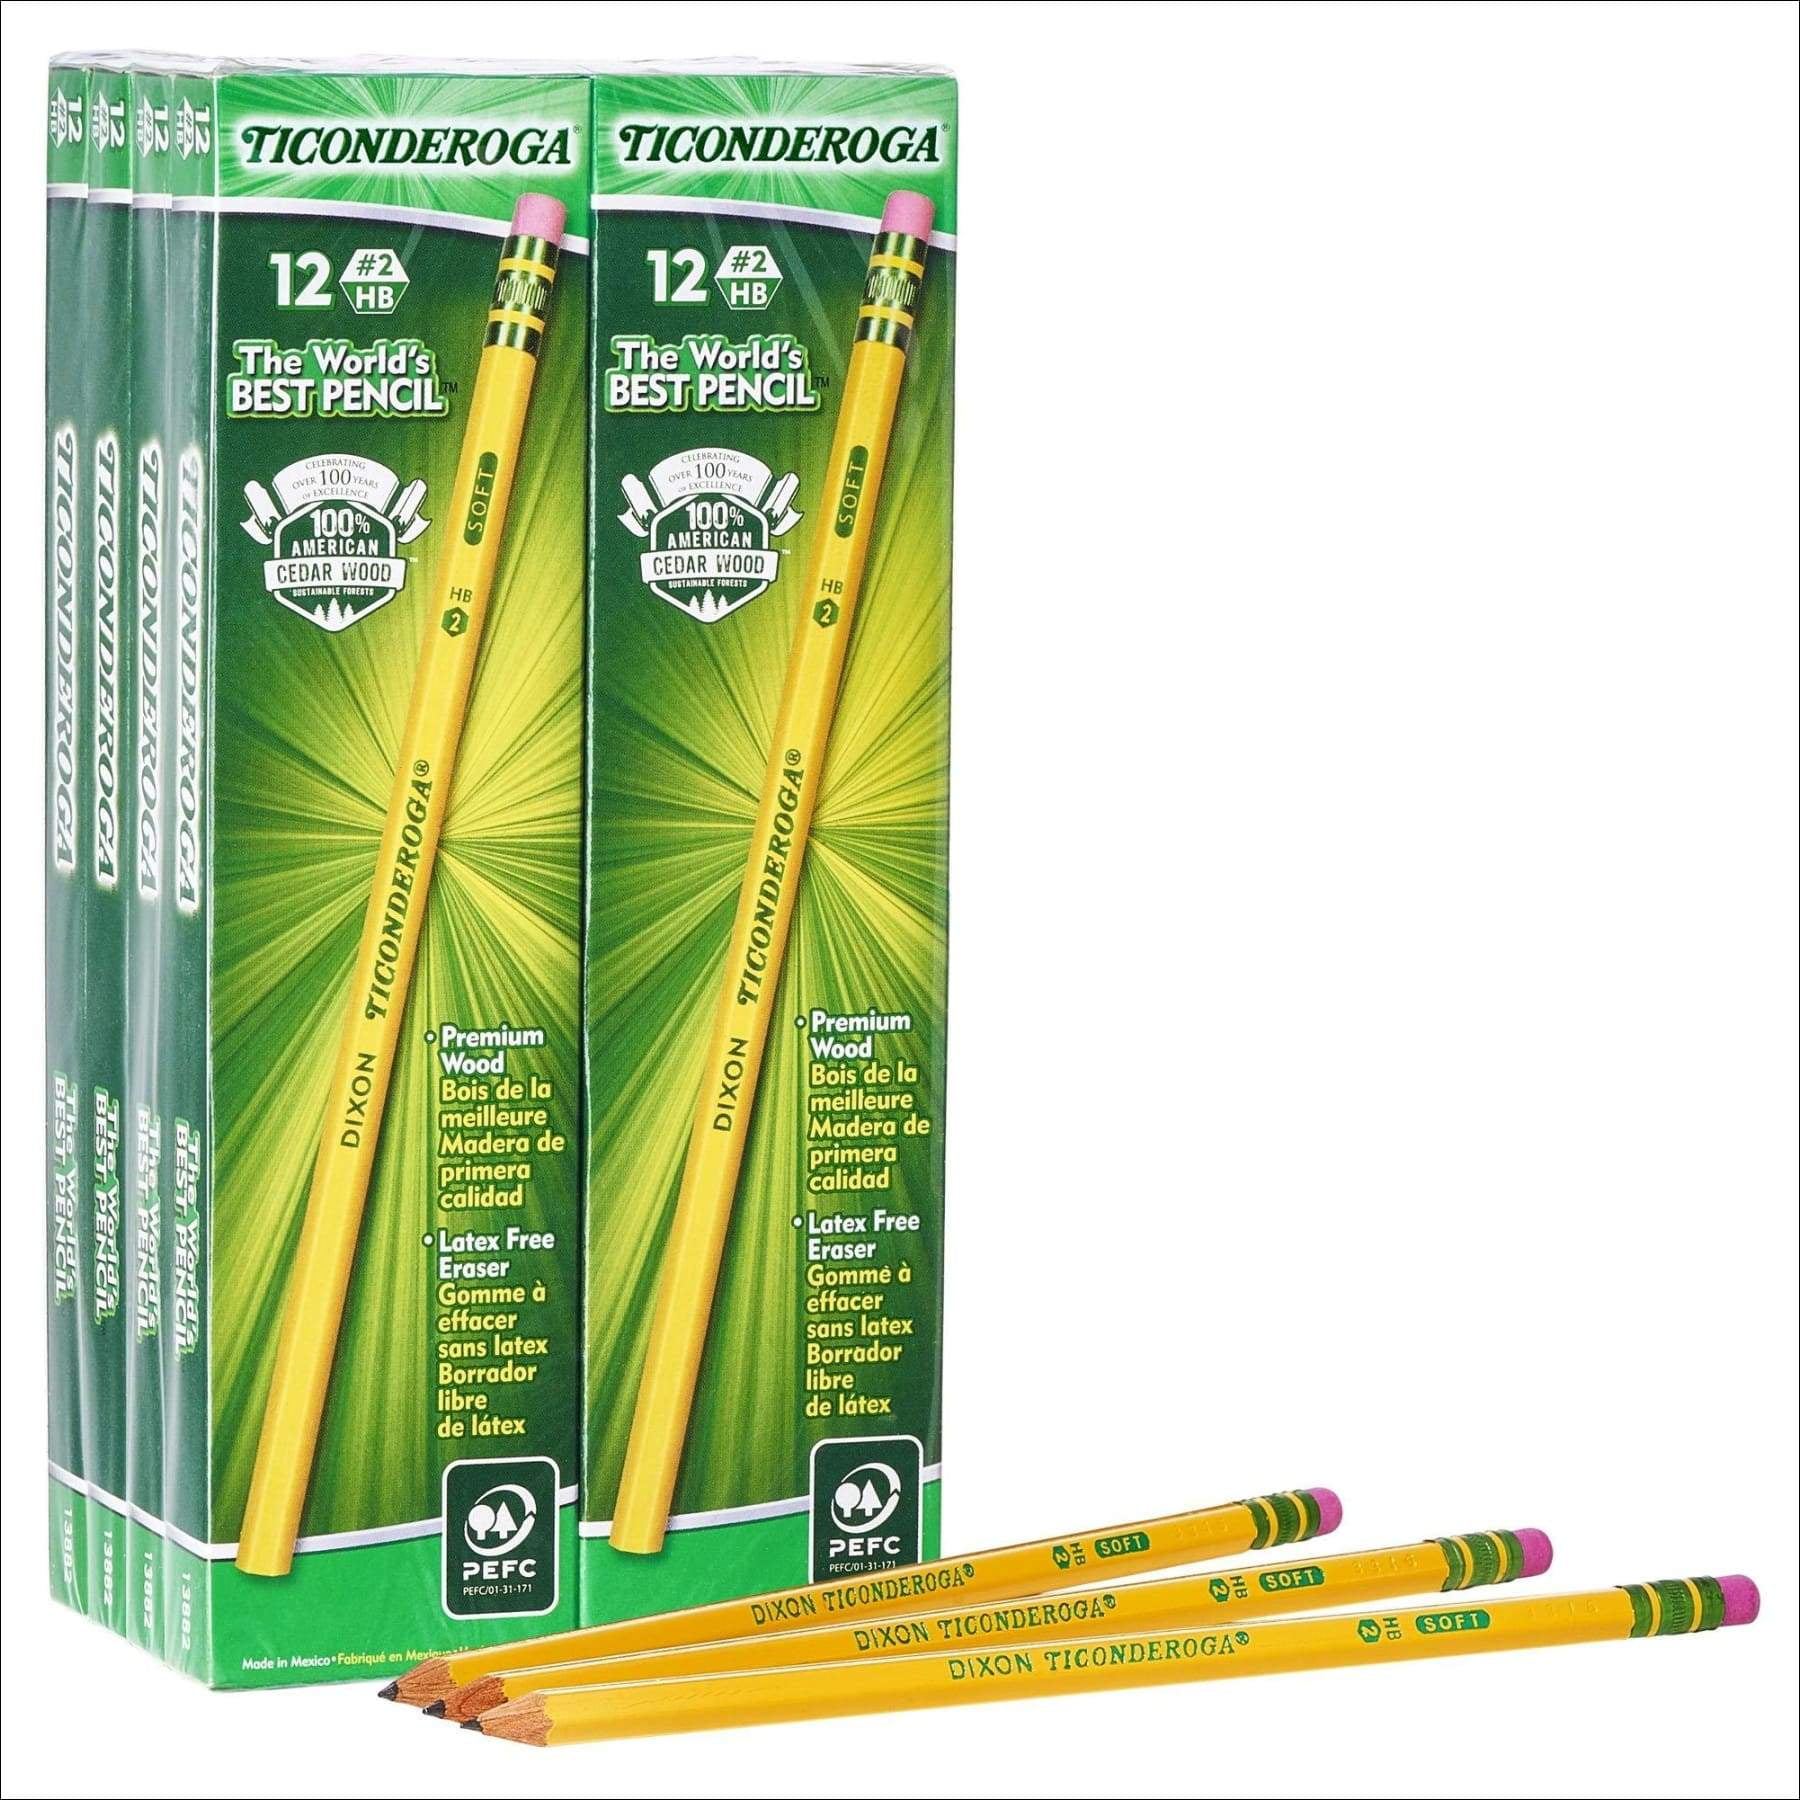 2 Woodcased Yellow Barrel HB Pencils for sale online 96-Count Dixon Ticonderoga No 13872 